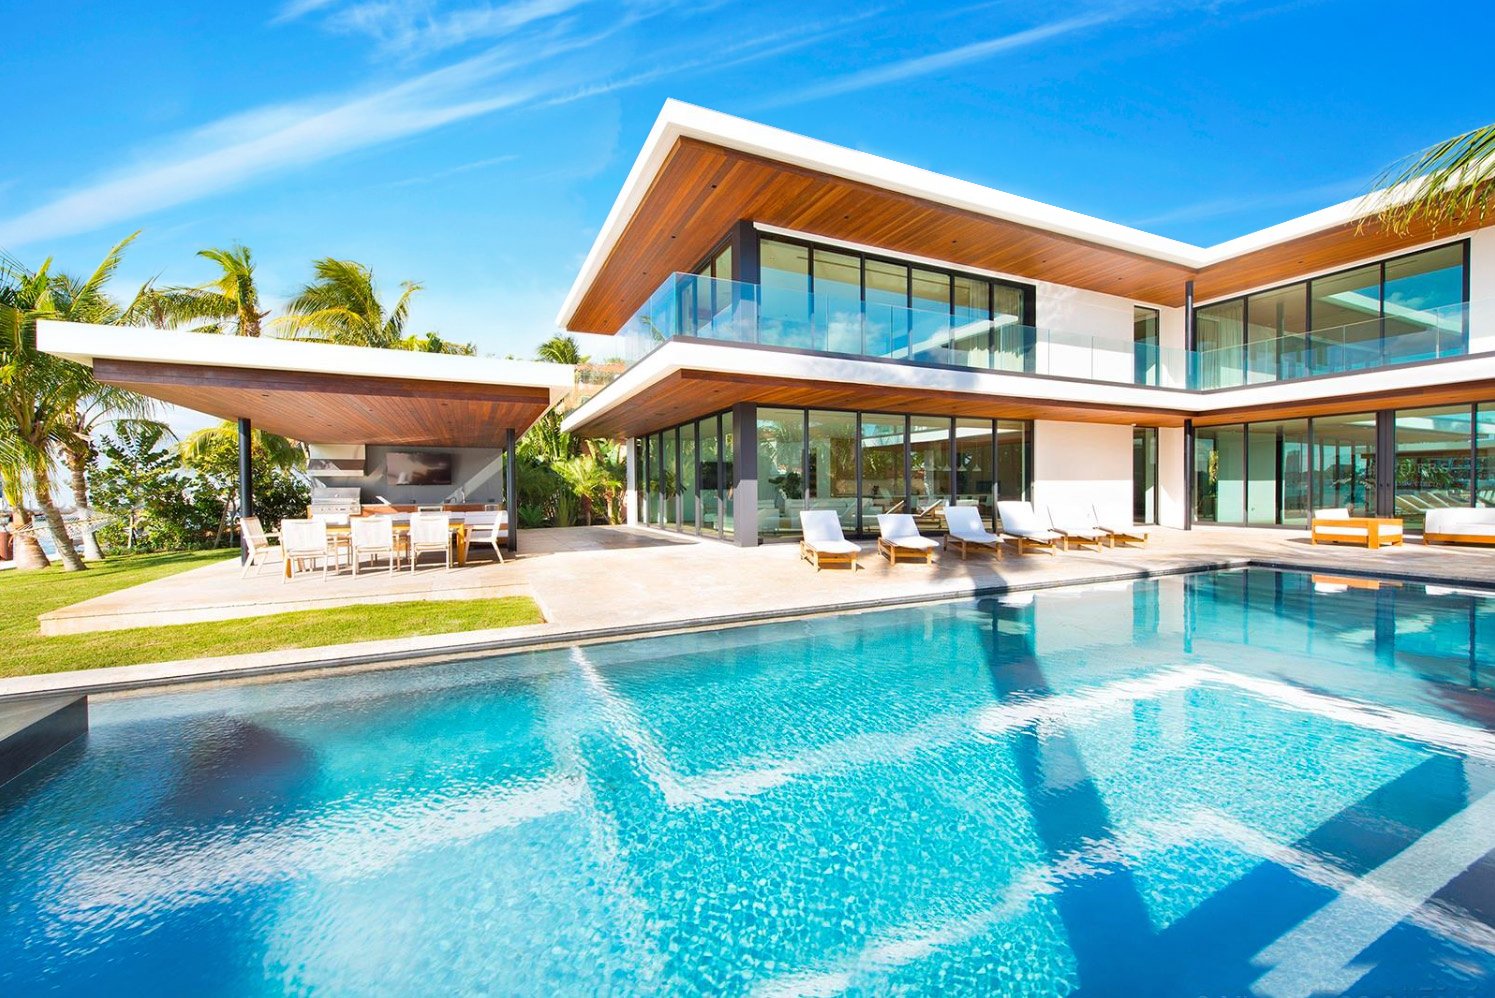 Real Estate Mogul Alex Sapir Lists Venetian Islands Tropical Modern Waterfront Compound For $54 Million 10.jpg